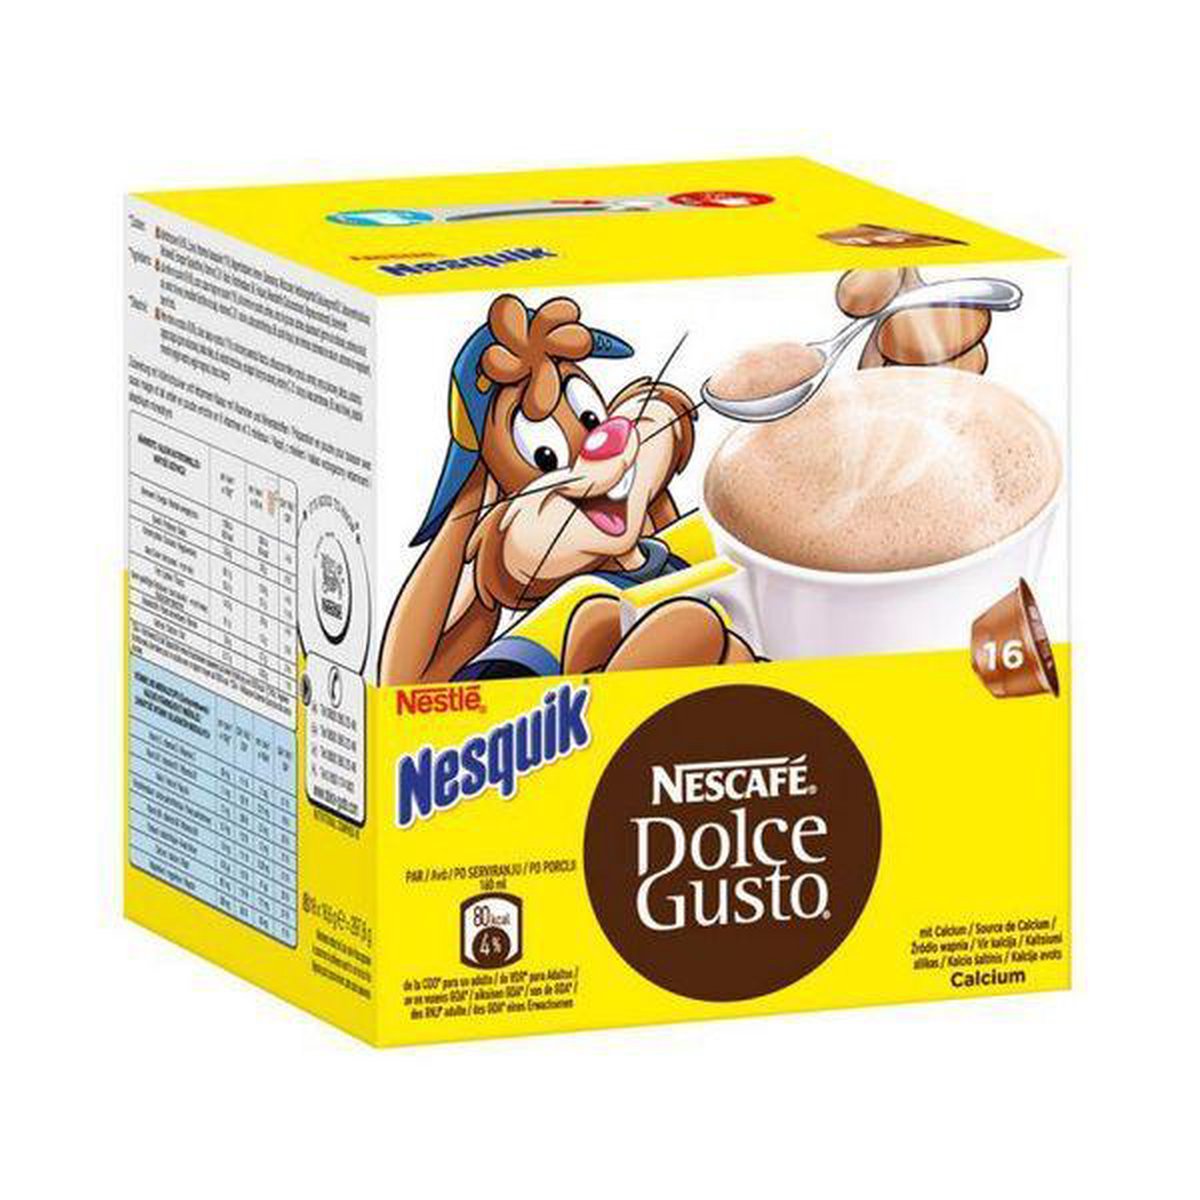 Dolce Gusto Nesquik Chocolademelk - 16 cups